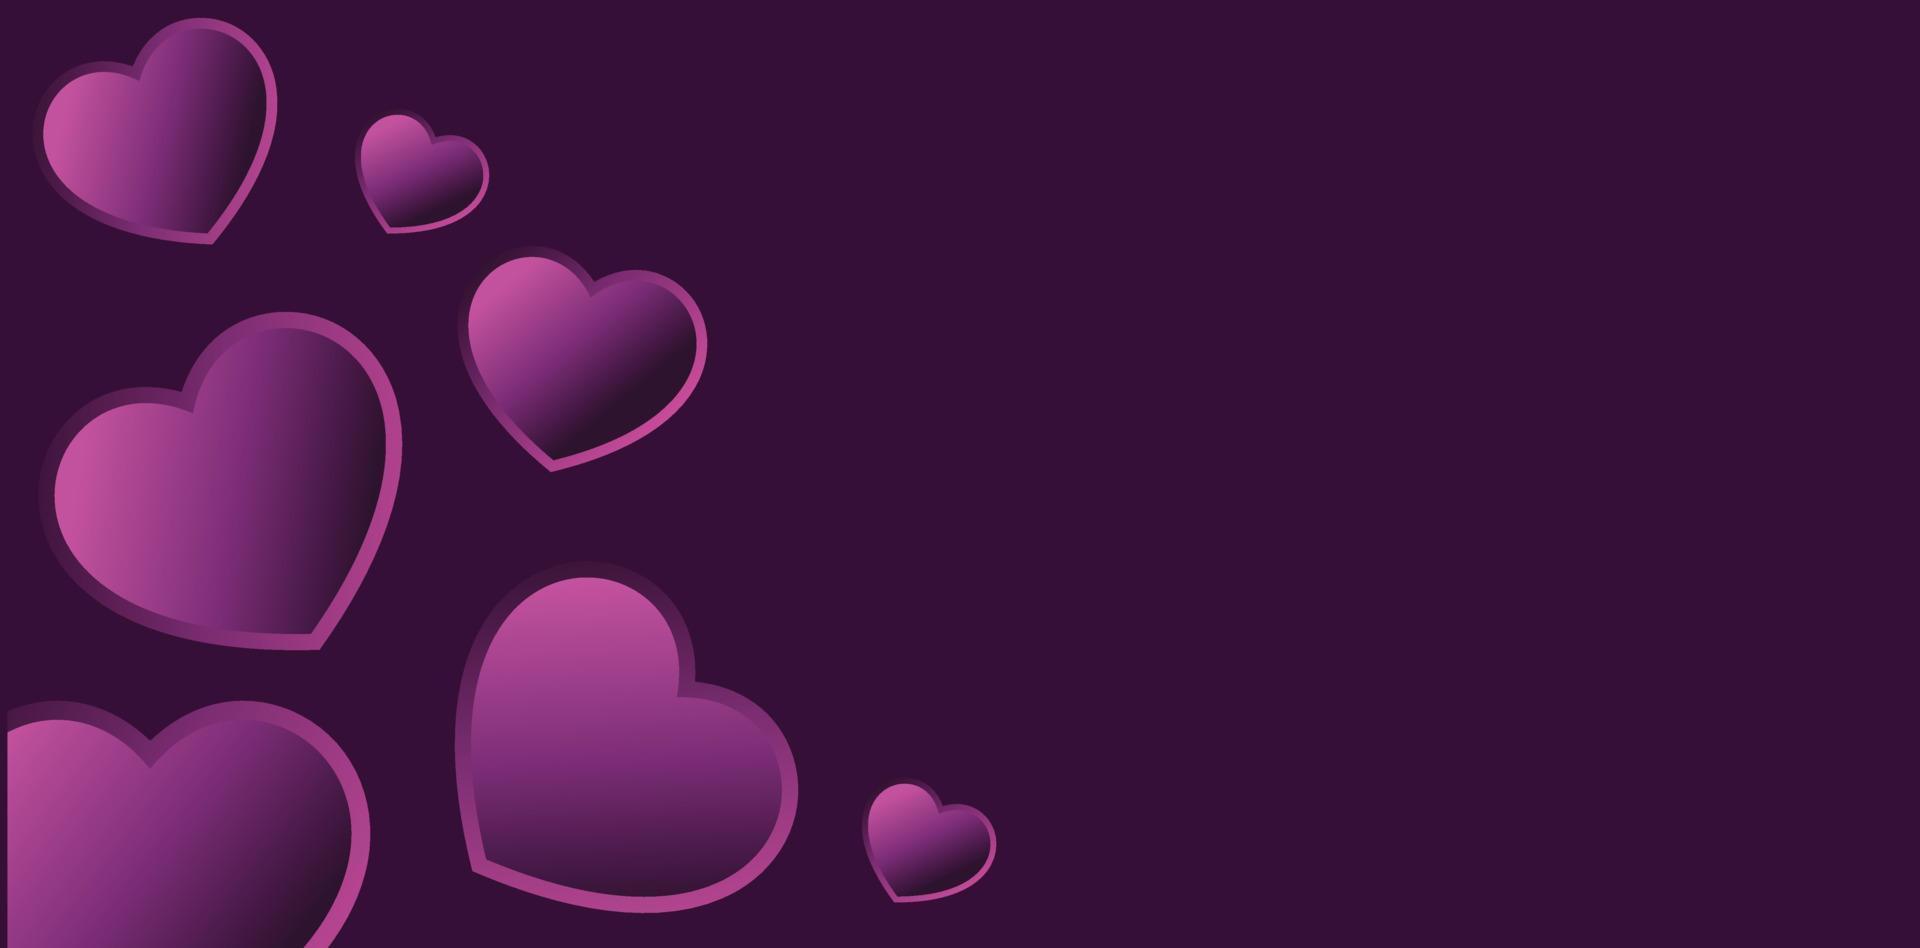 purple valentines day background vector